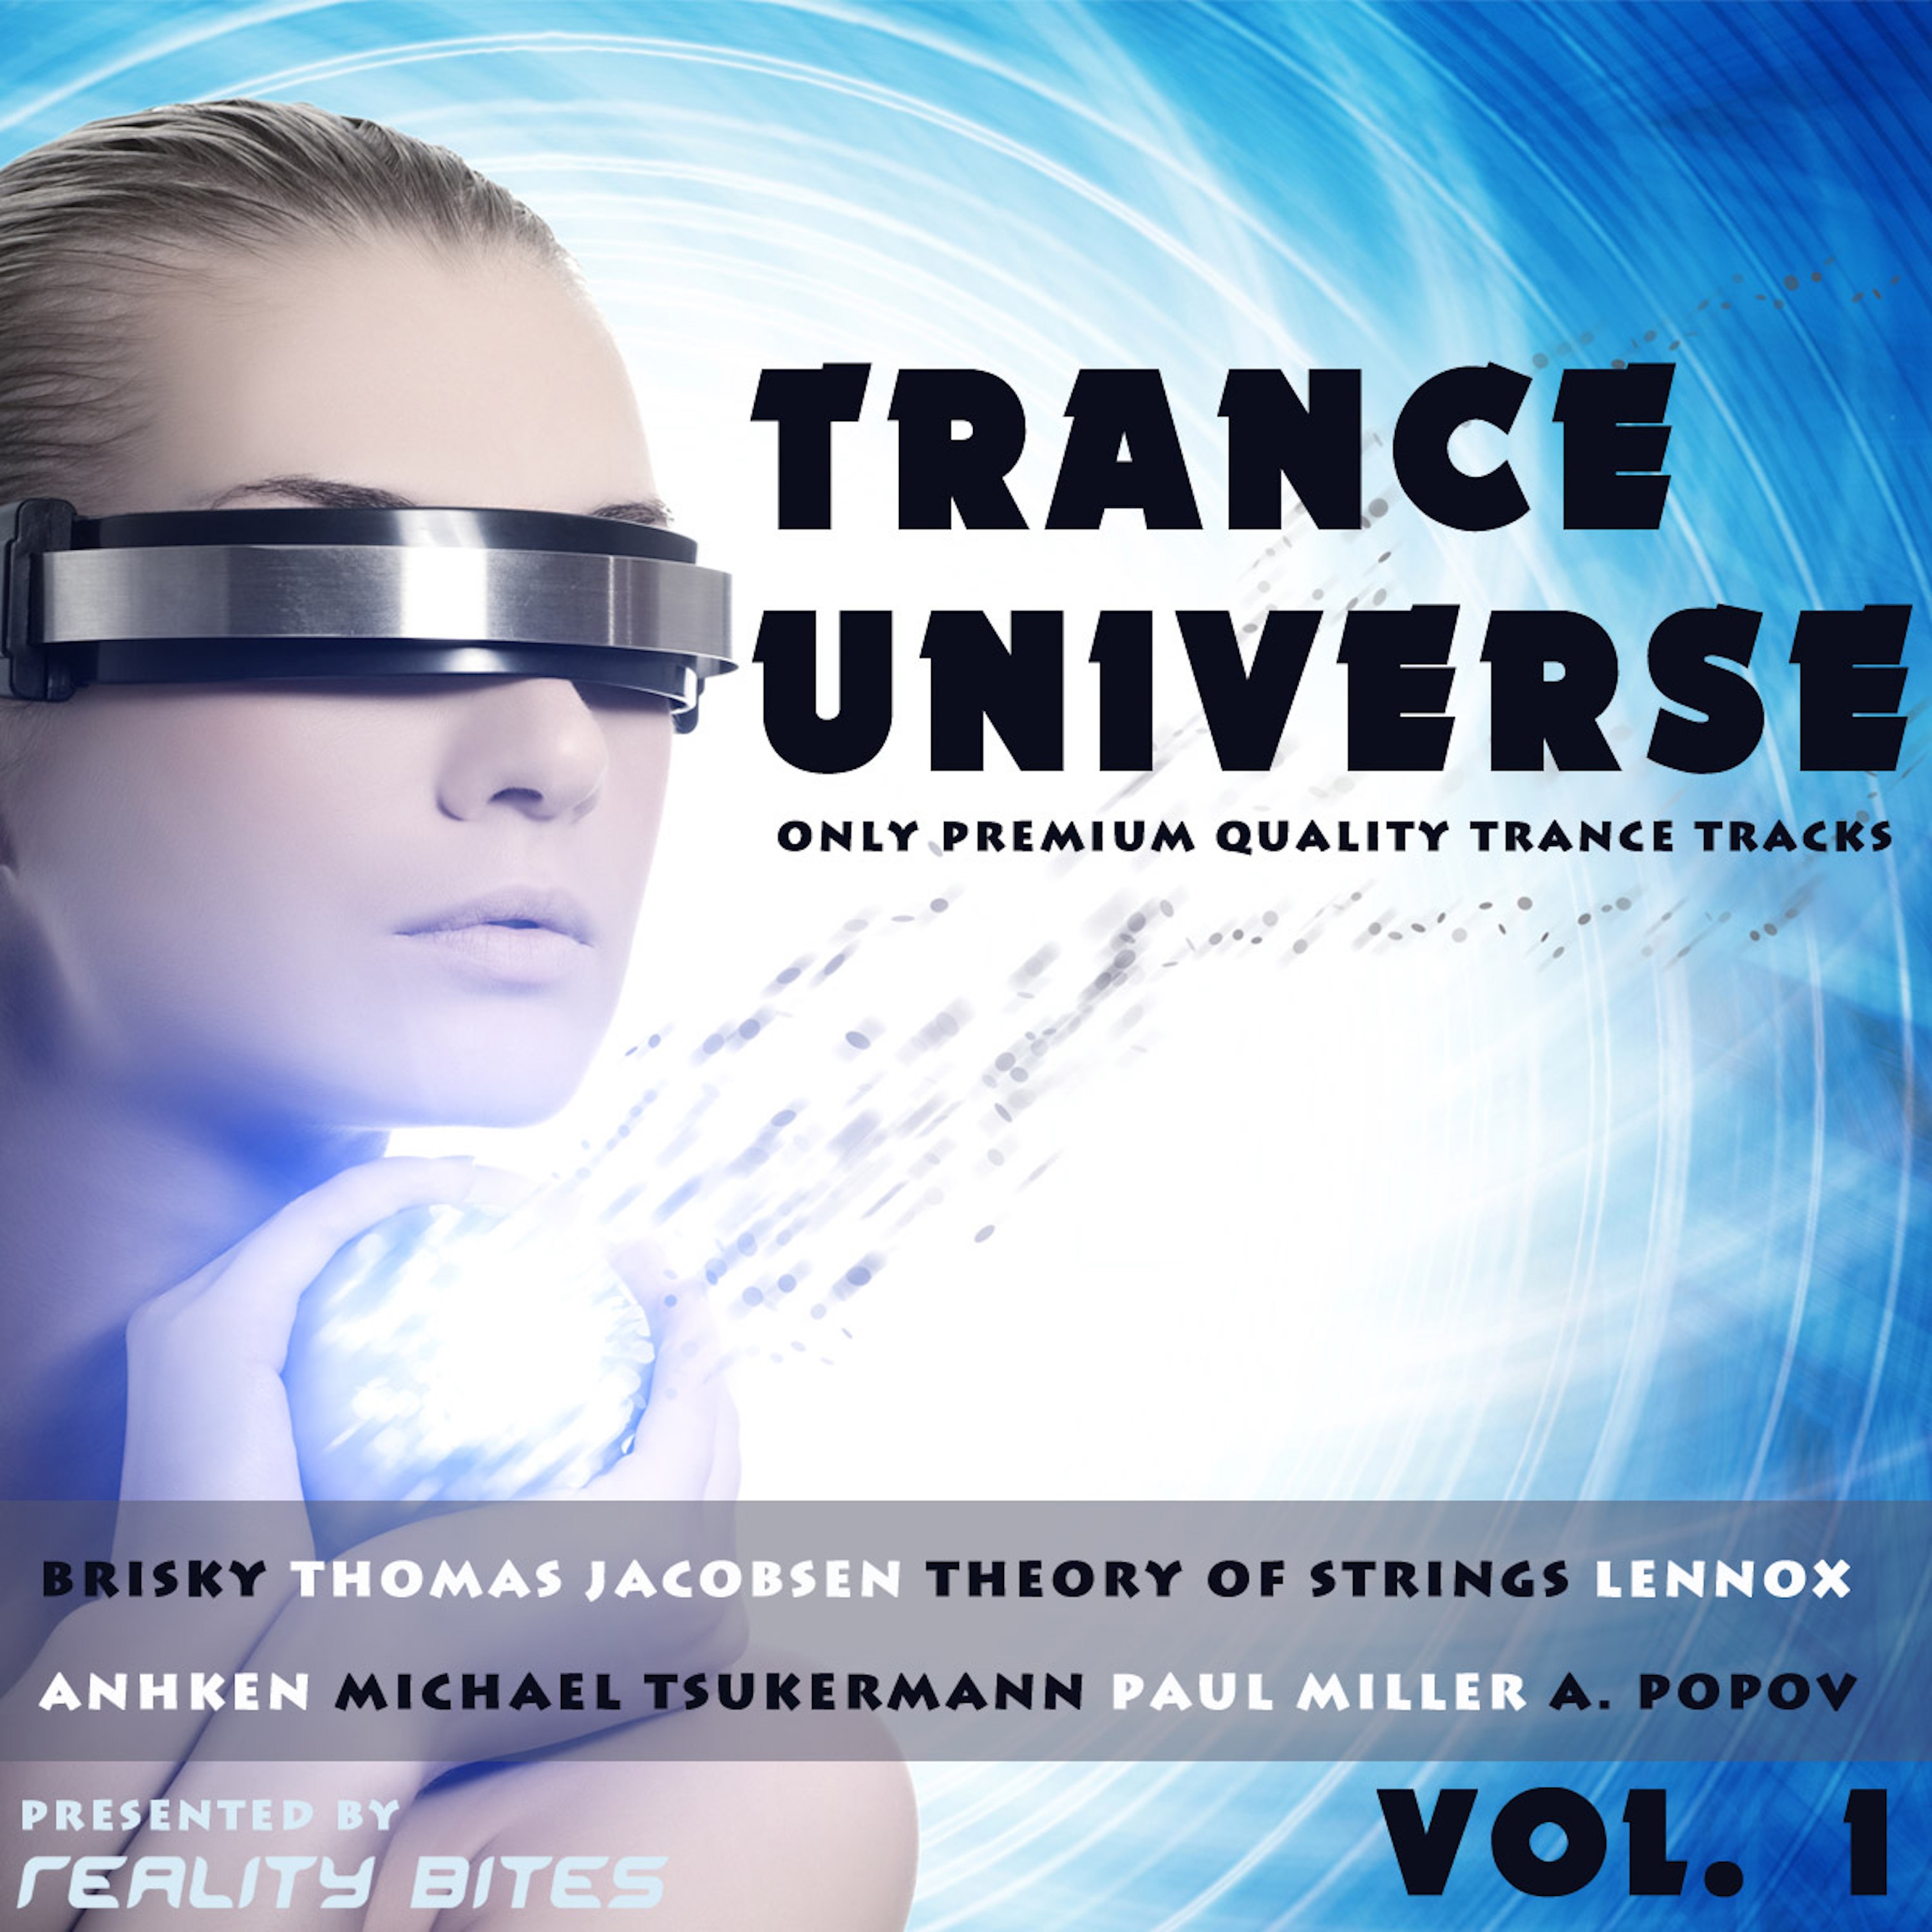 Trance Universe, Vol. 1 - Only Premium Quality Trance Tracks